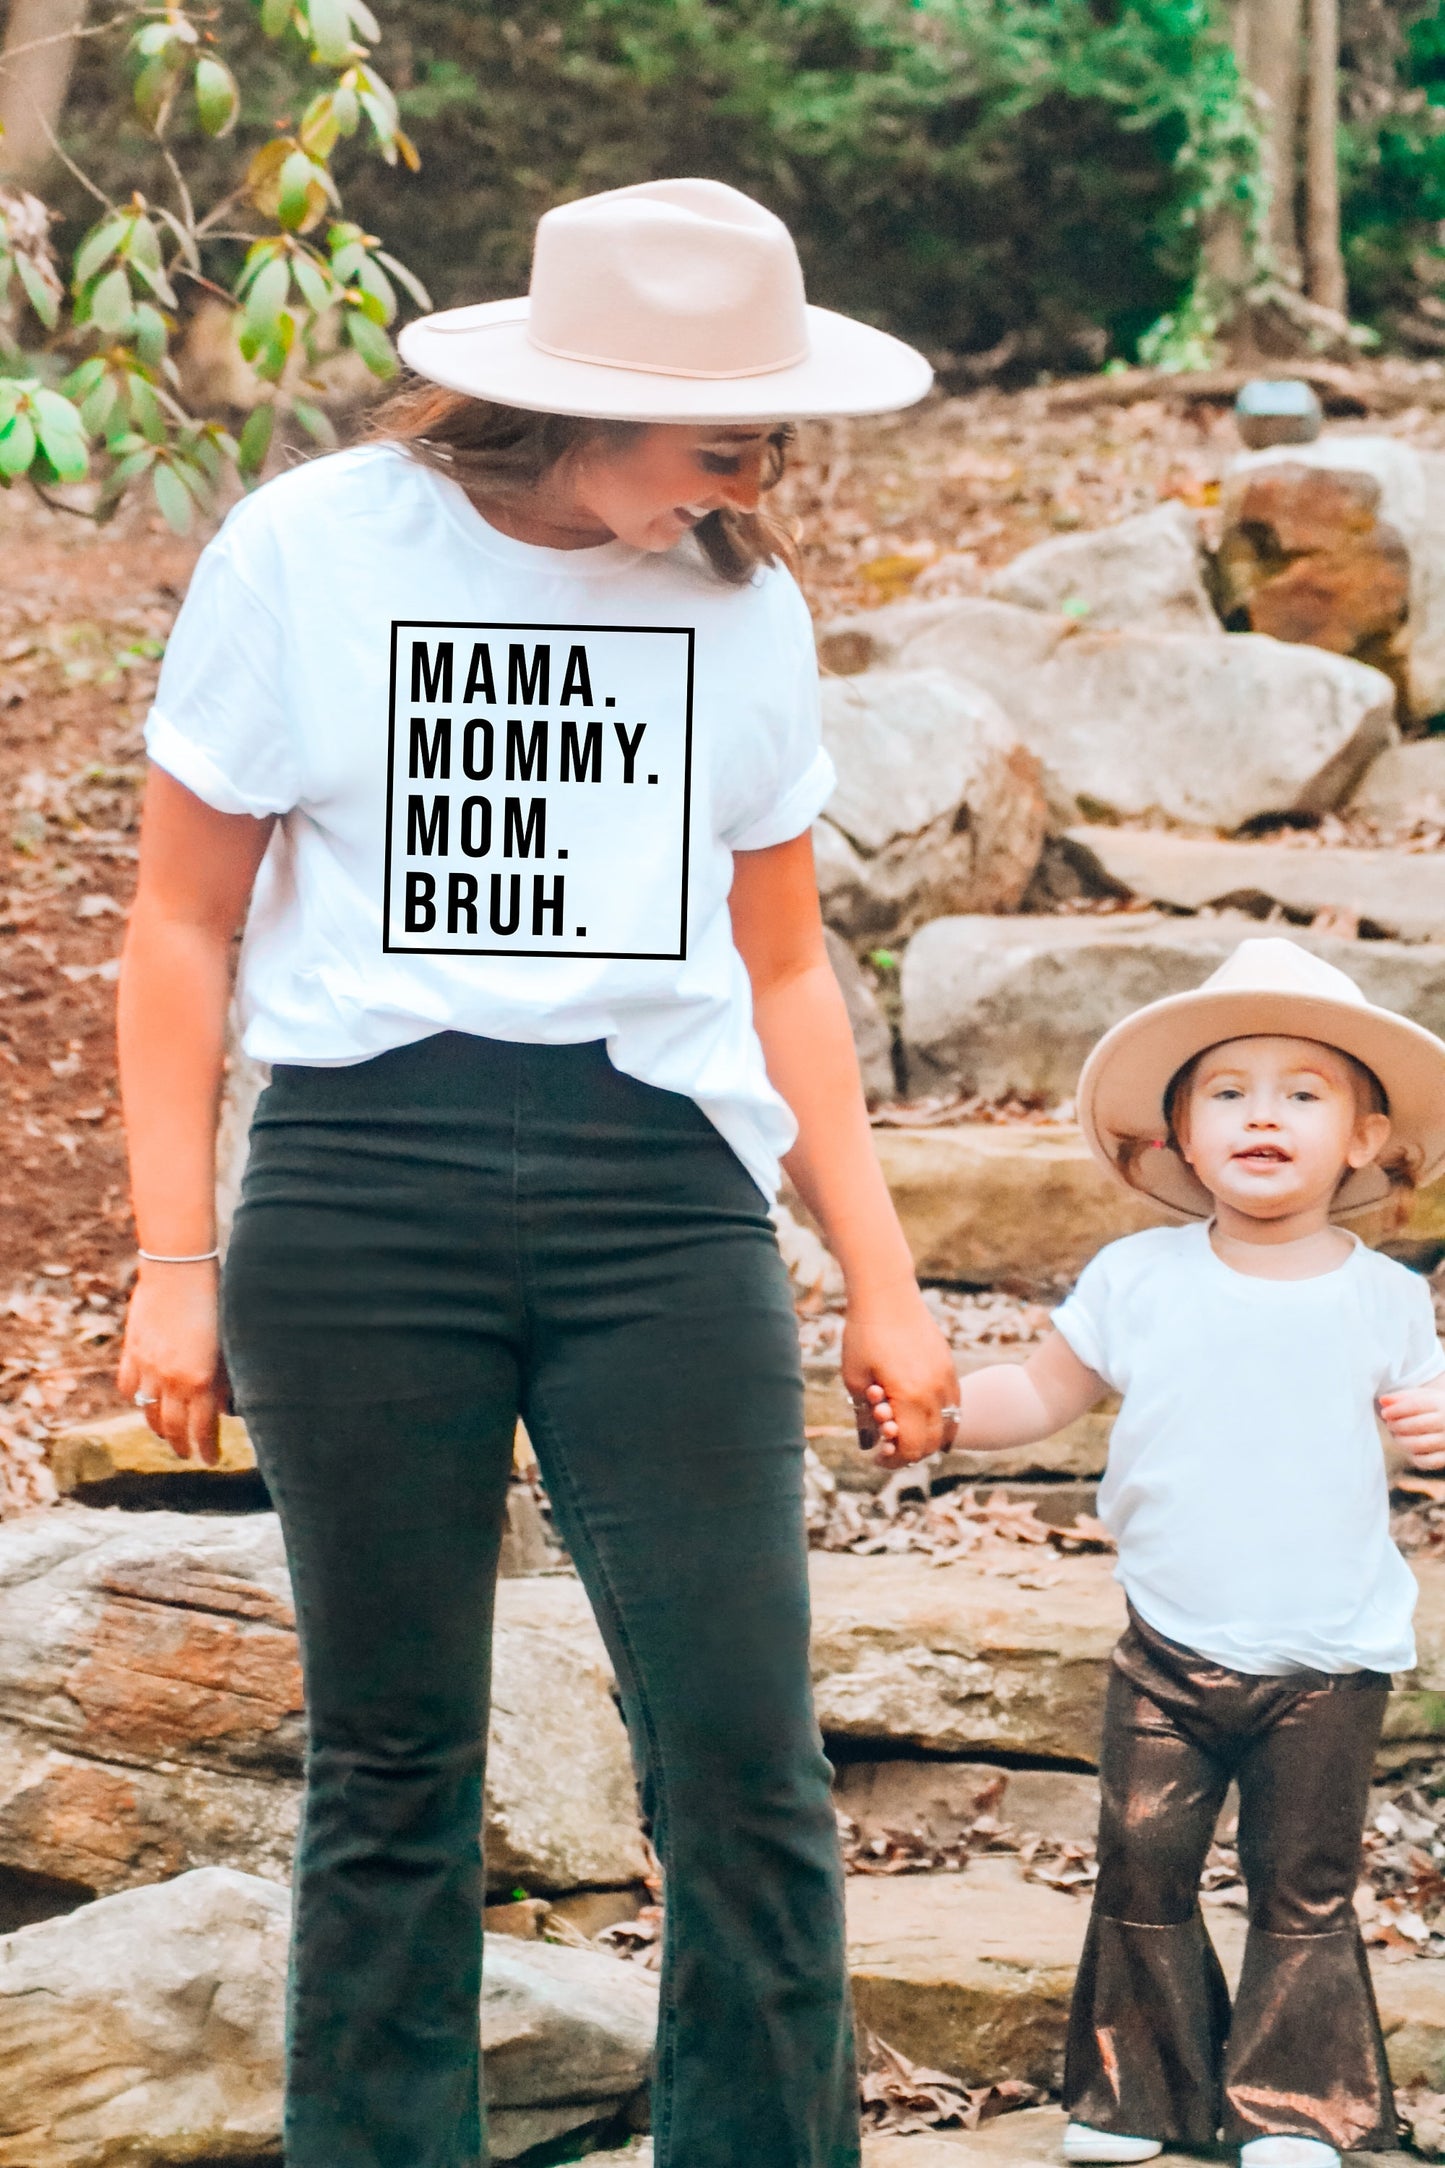 Mother's Day Gift | Boymom Shirt | Gift for Mom | Bruh Shirt | Momma Mommy Mom Bruh | Mother's Day Shirt | Mothers Day Present | Boymom Gift